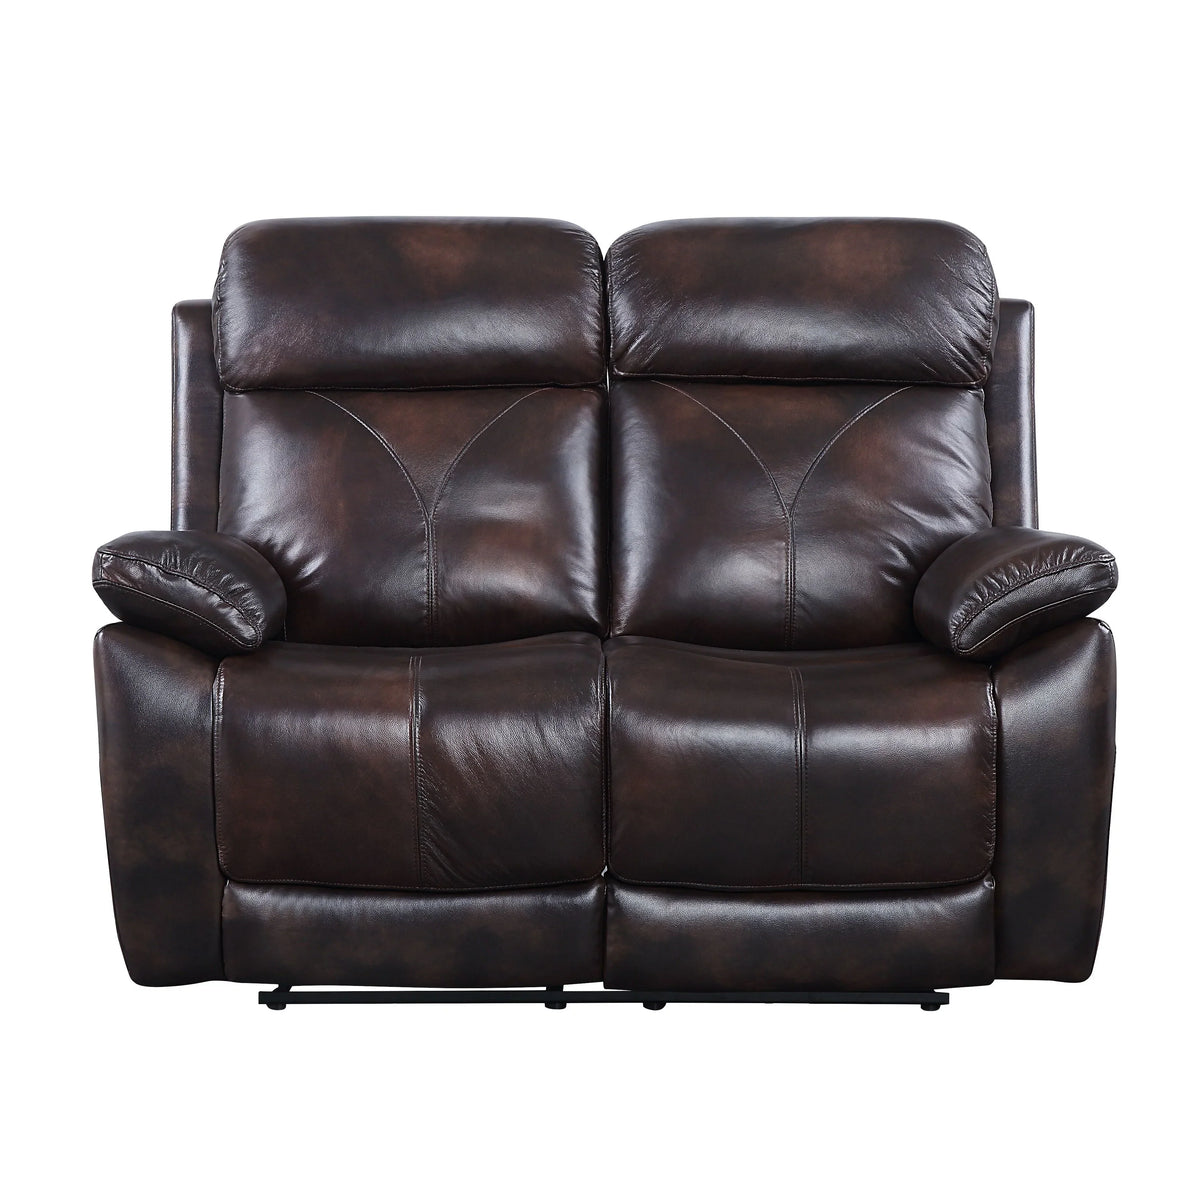 Perfiel 2 Tone Dark Brown Top Grain Leather Loveseat Model LV00067 By ACME Furniture